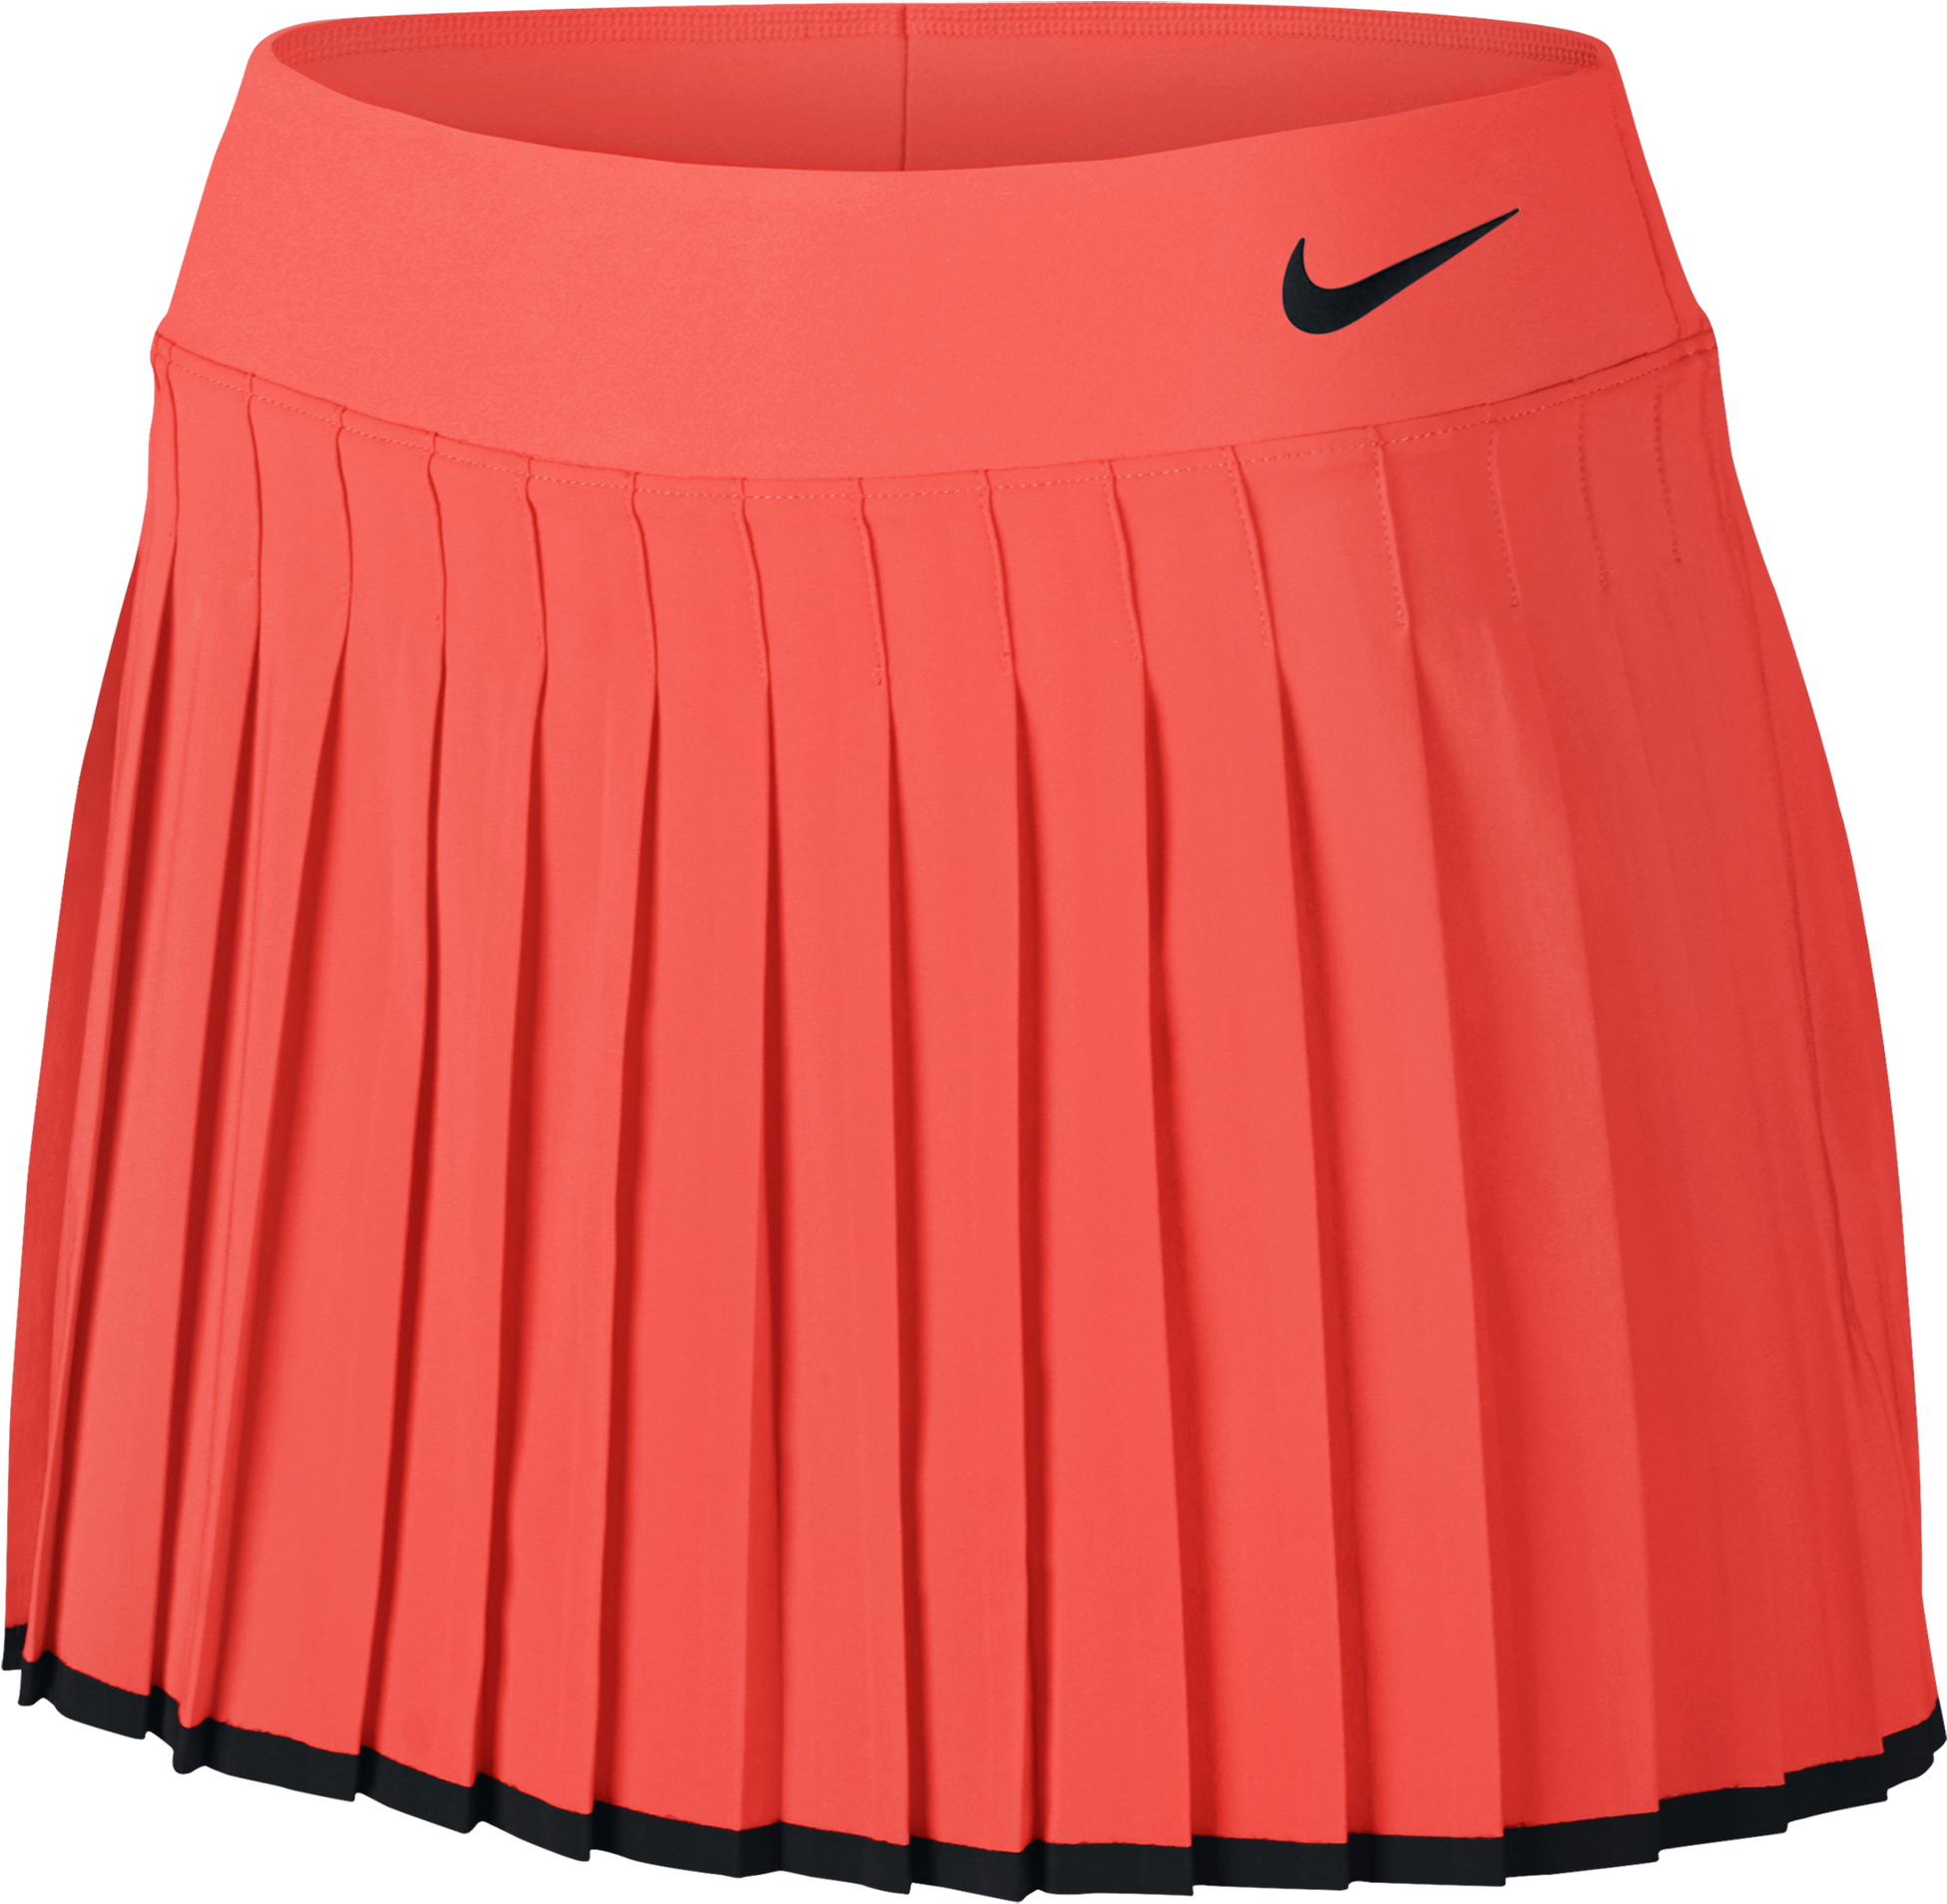 Nike Women's Victory Tennis Skirt - Nikecourt Victory Damen-tennisrock (2000x1999), Png Download